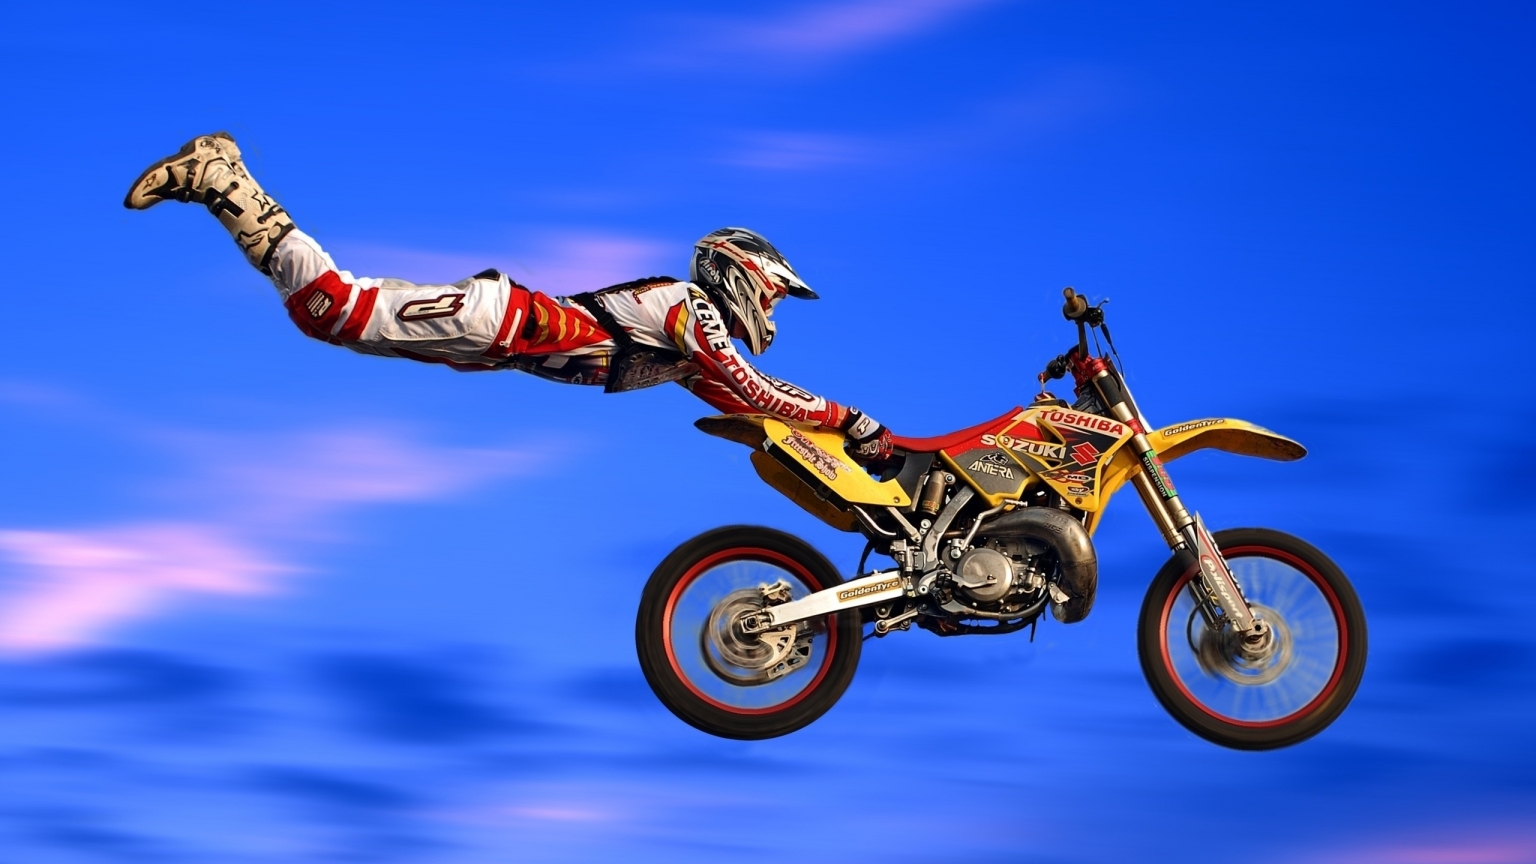 Moto Acrobatic Figure for 1536 x 864 HDTV resolution